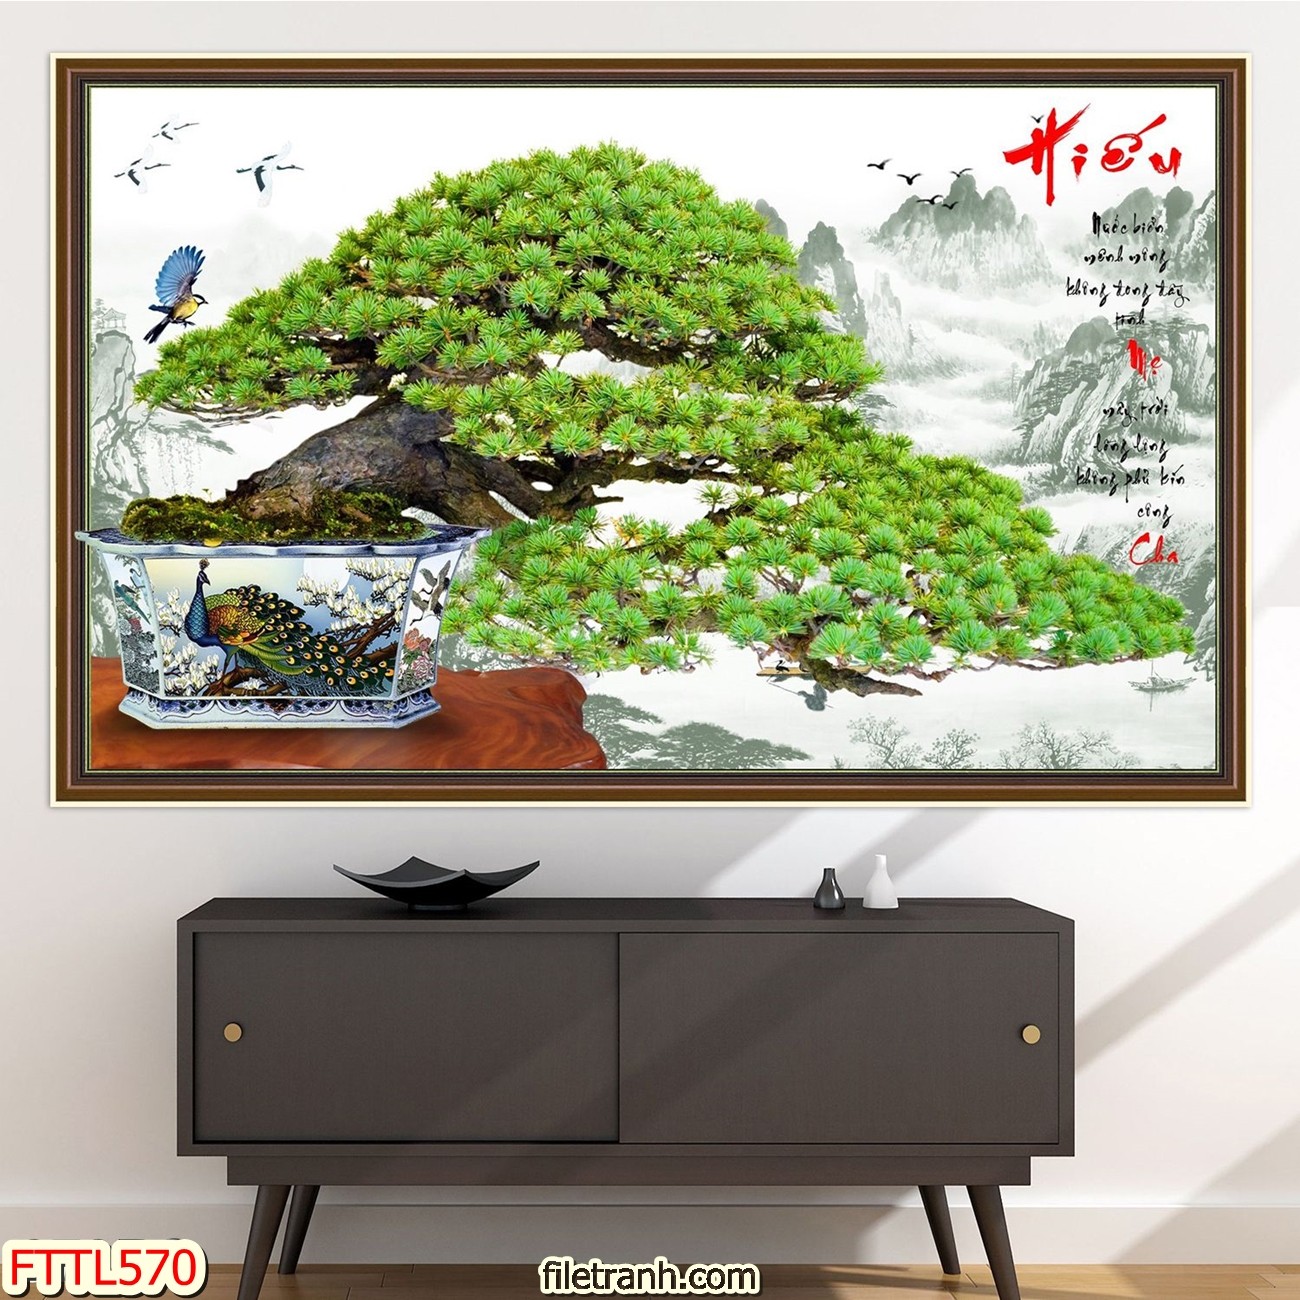 https://filetranh.com/file-tranh-chau-mai-bonsai/file-tranh-chau-mai-bonsai-fttl570.html